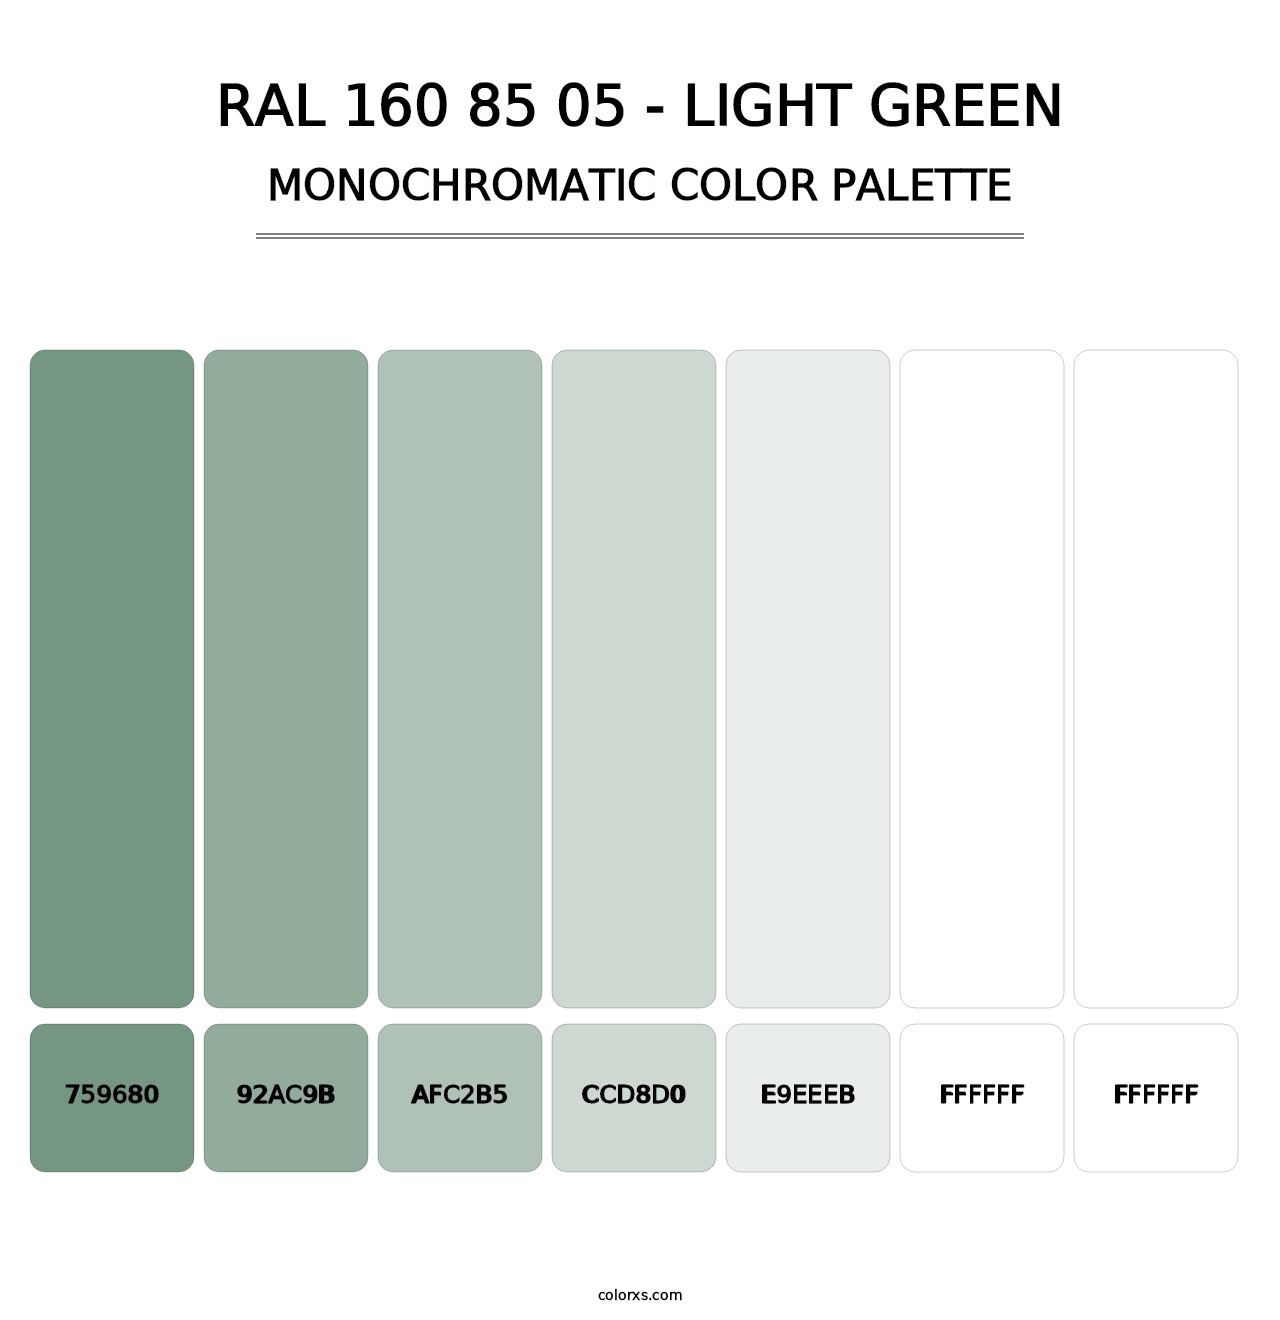 RAL 160 85 05 - Light Green - Monochromatic Color Palette